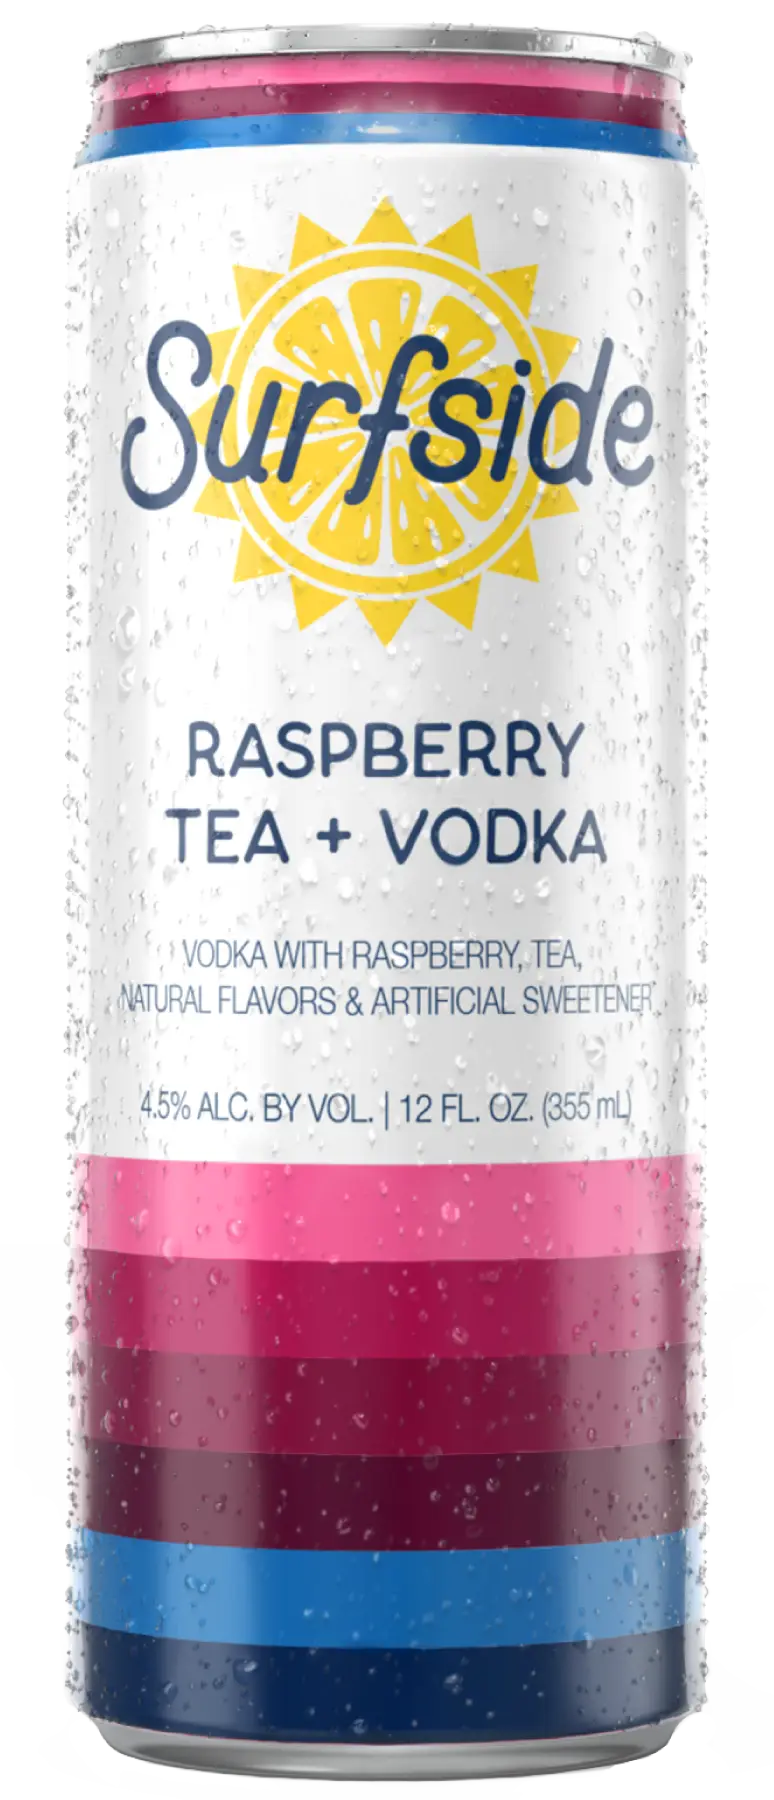 Surfside Raspberry Tea + Vodka